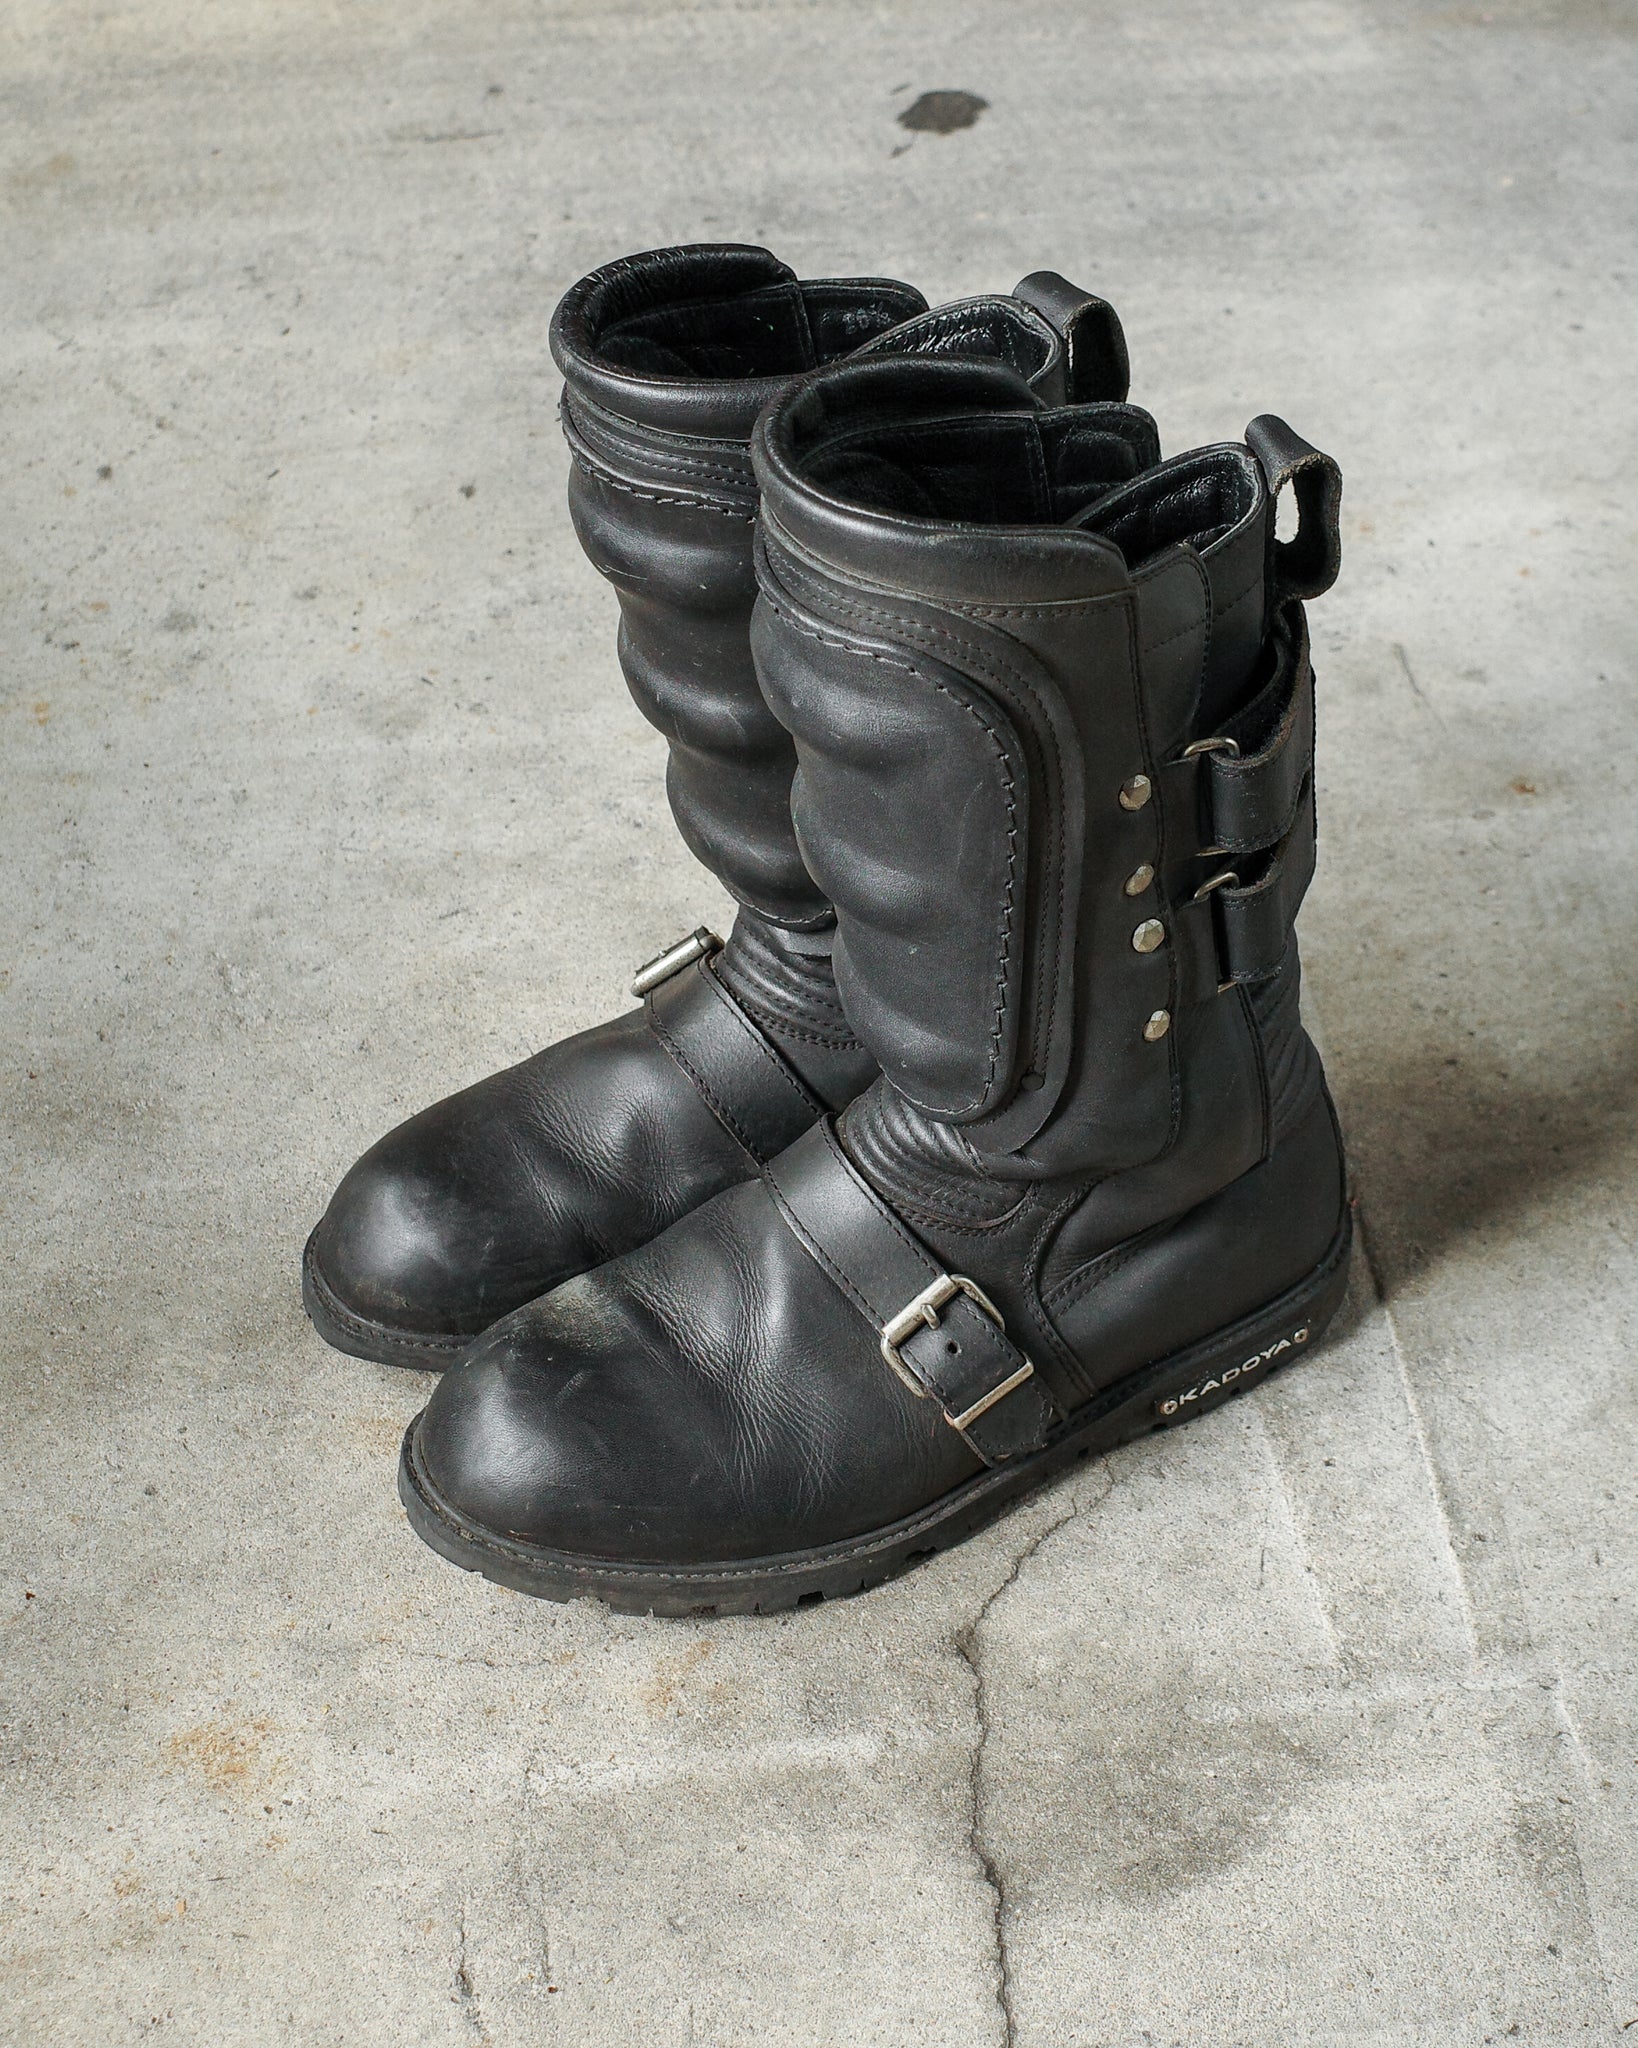 Kadoya Shield Boots